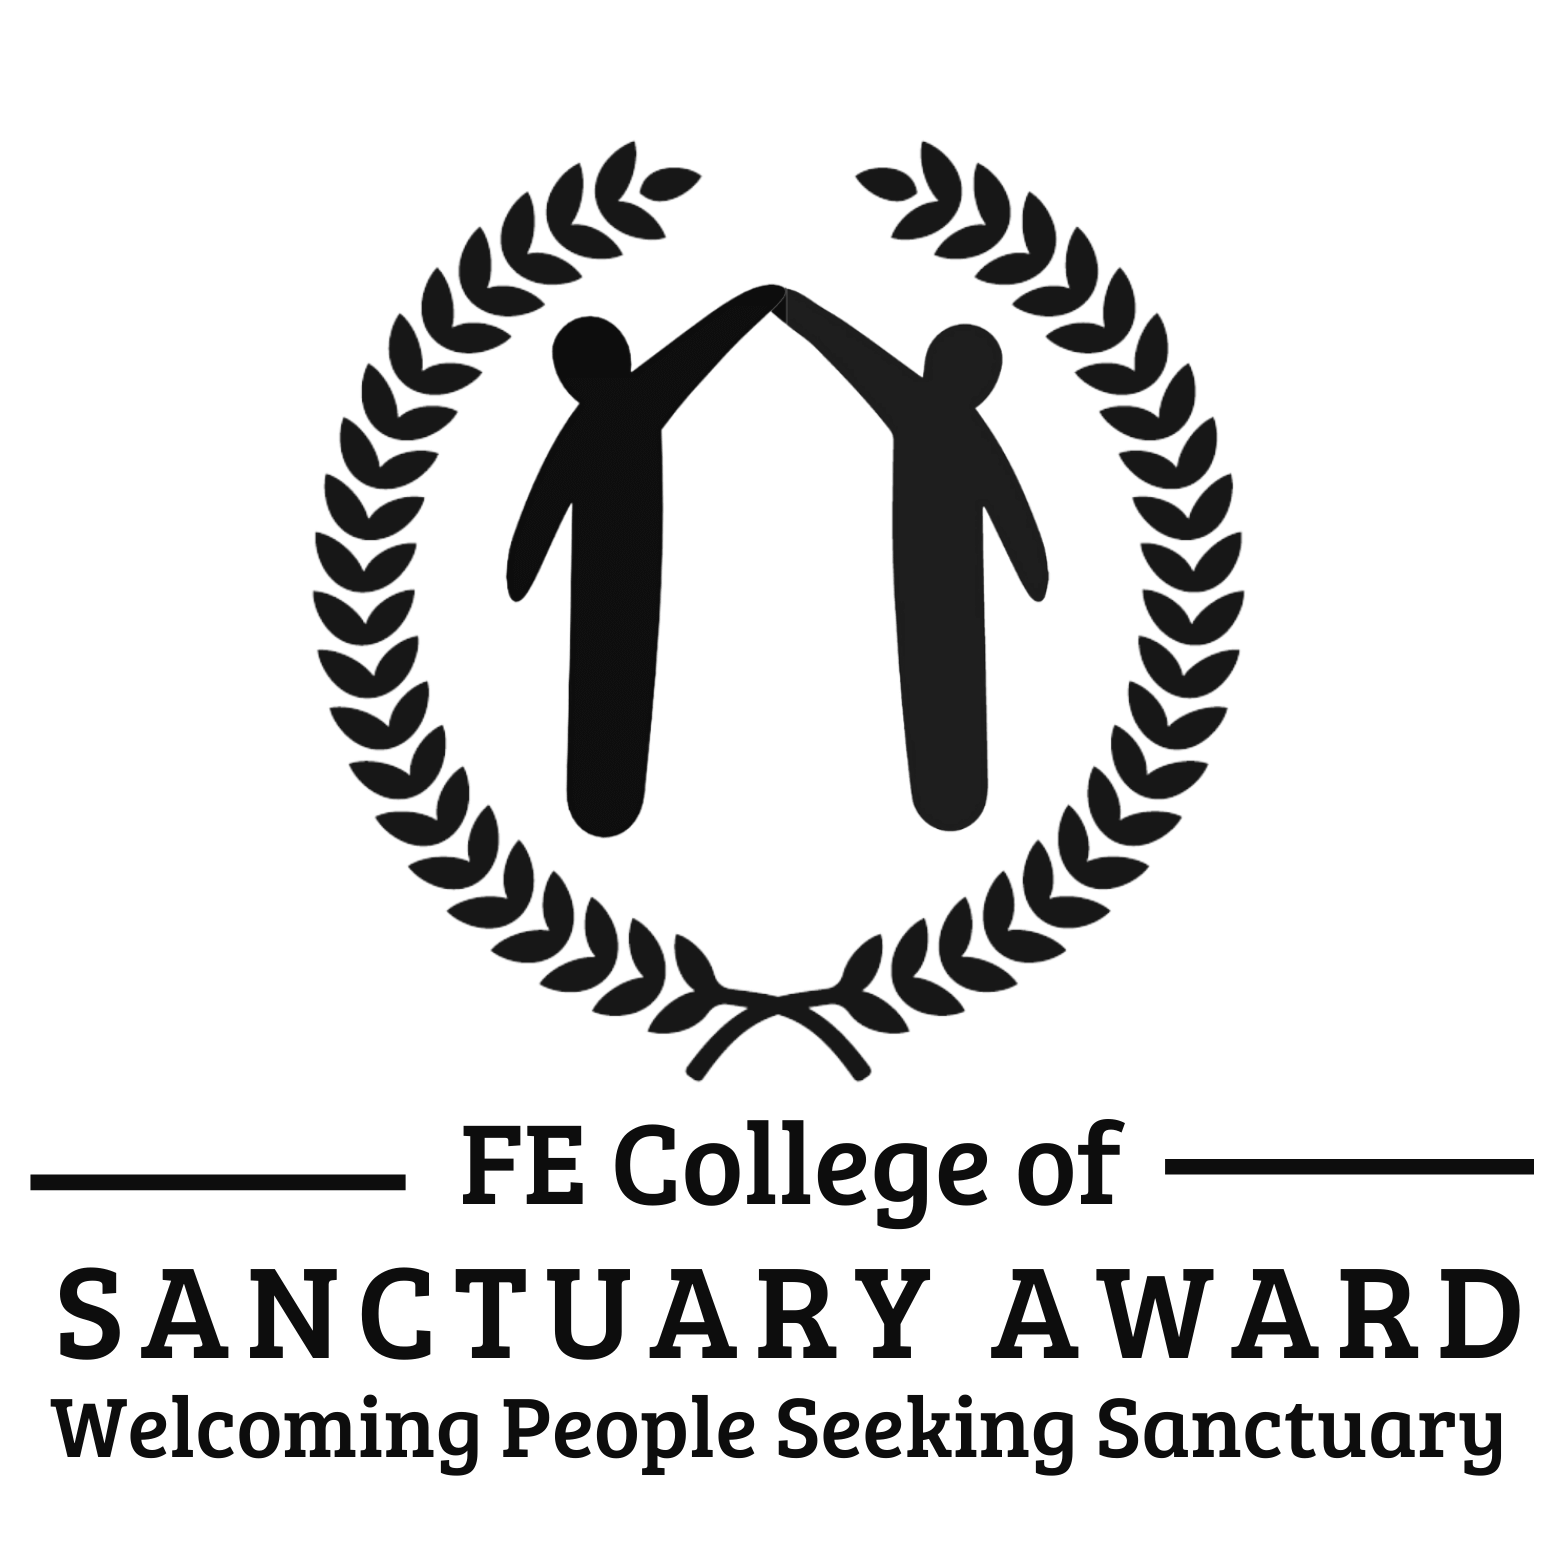 FE College of Sanctuary Award logo